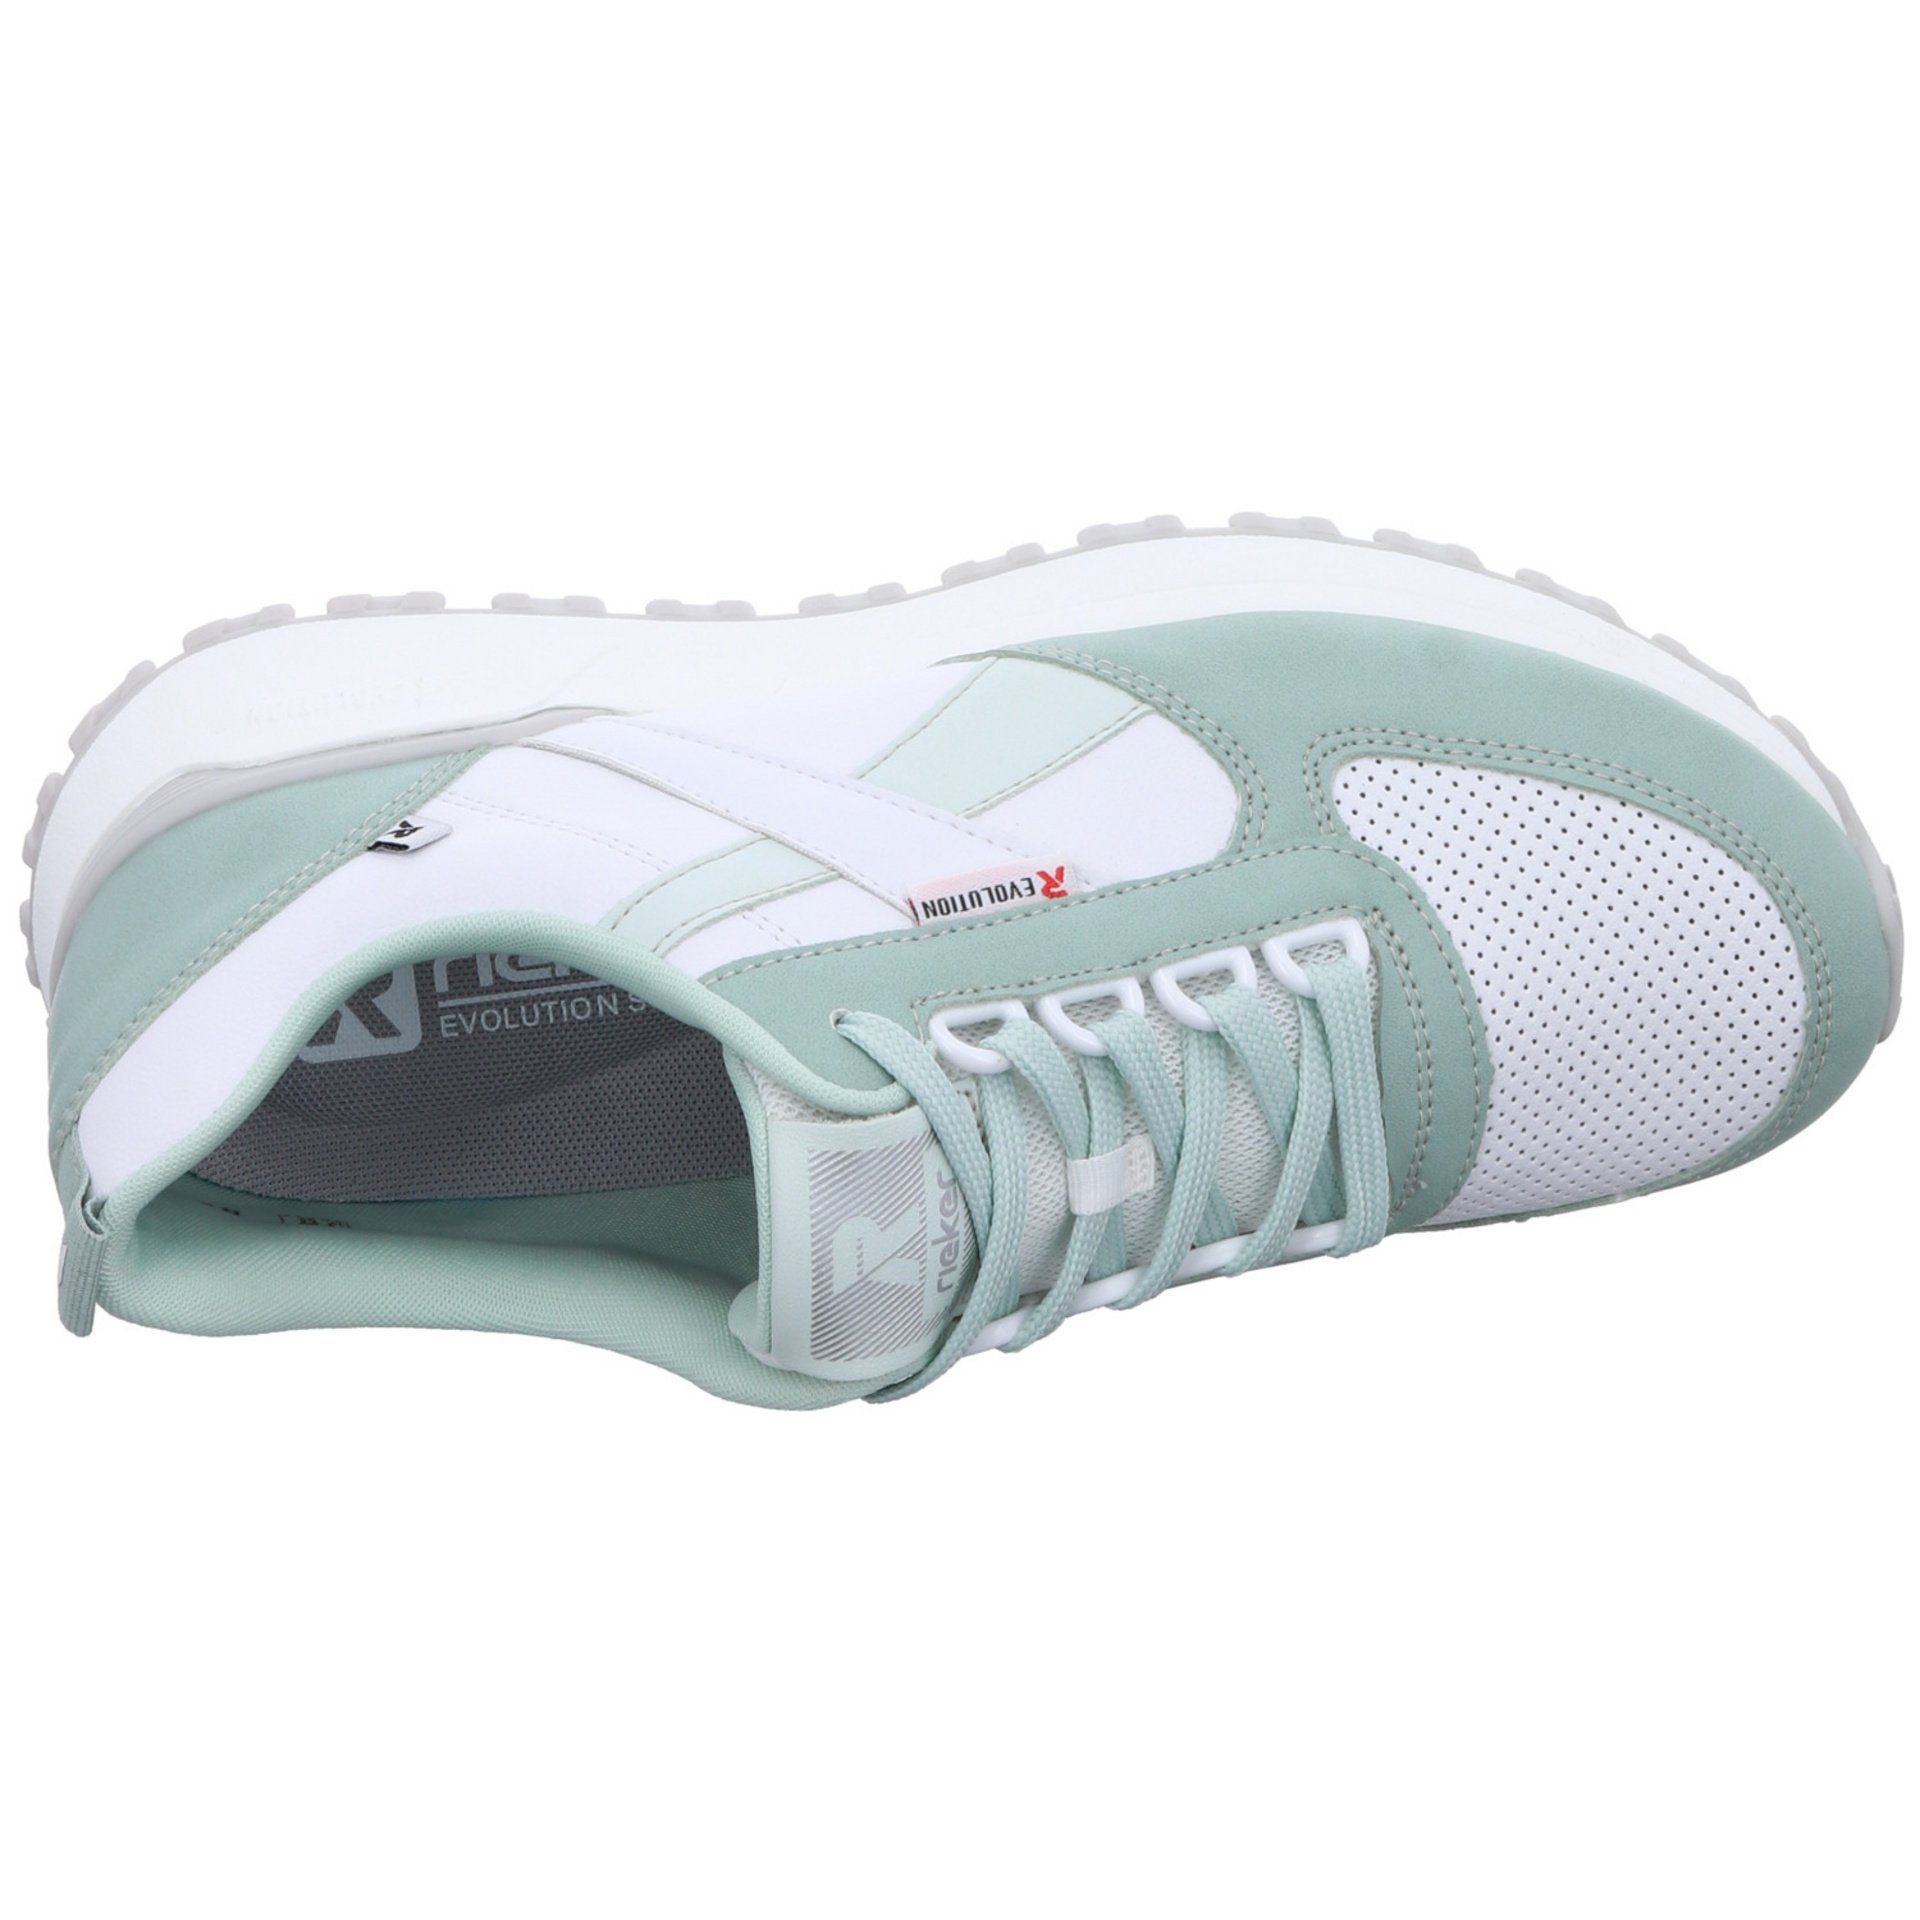 Schuhe Leder-/Textilkombination Sneaker Rieker Sneaker Damen R-Evolution peppermint/sportweiss/weiss/pa Sneaker